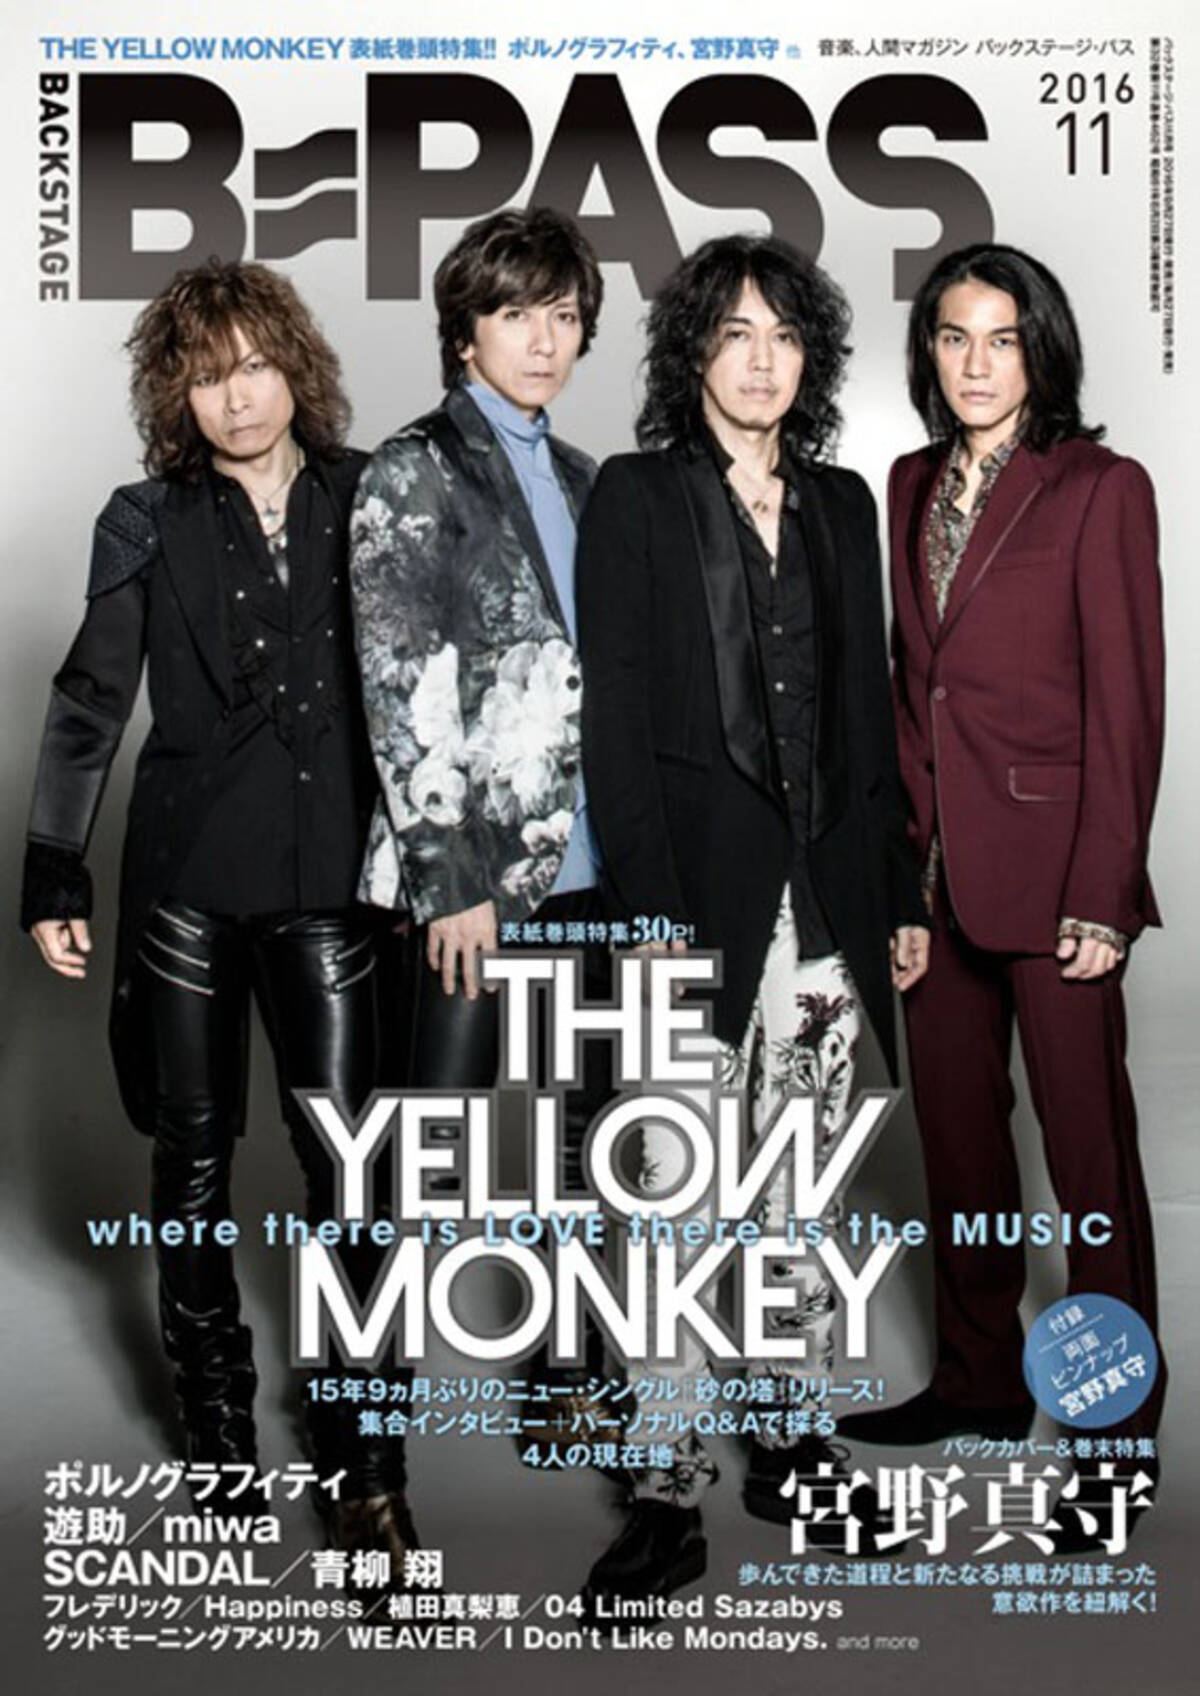 The Yellow Monkey 音楽誌 B Pass に表紙 巻頭30ページ大特集で登場 エキサイトニュース